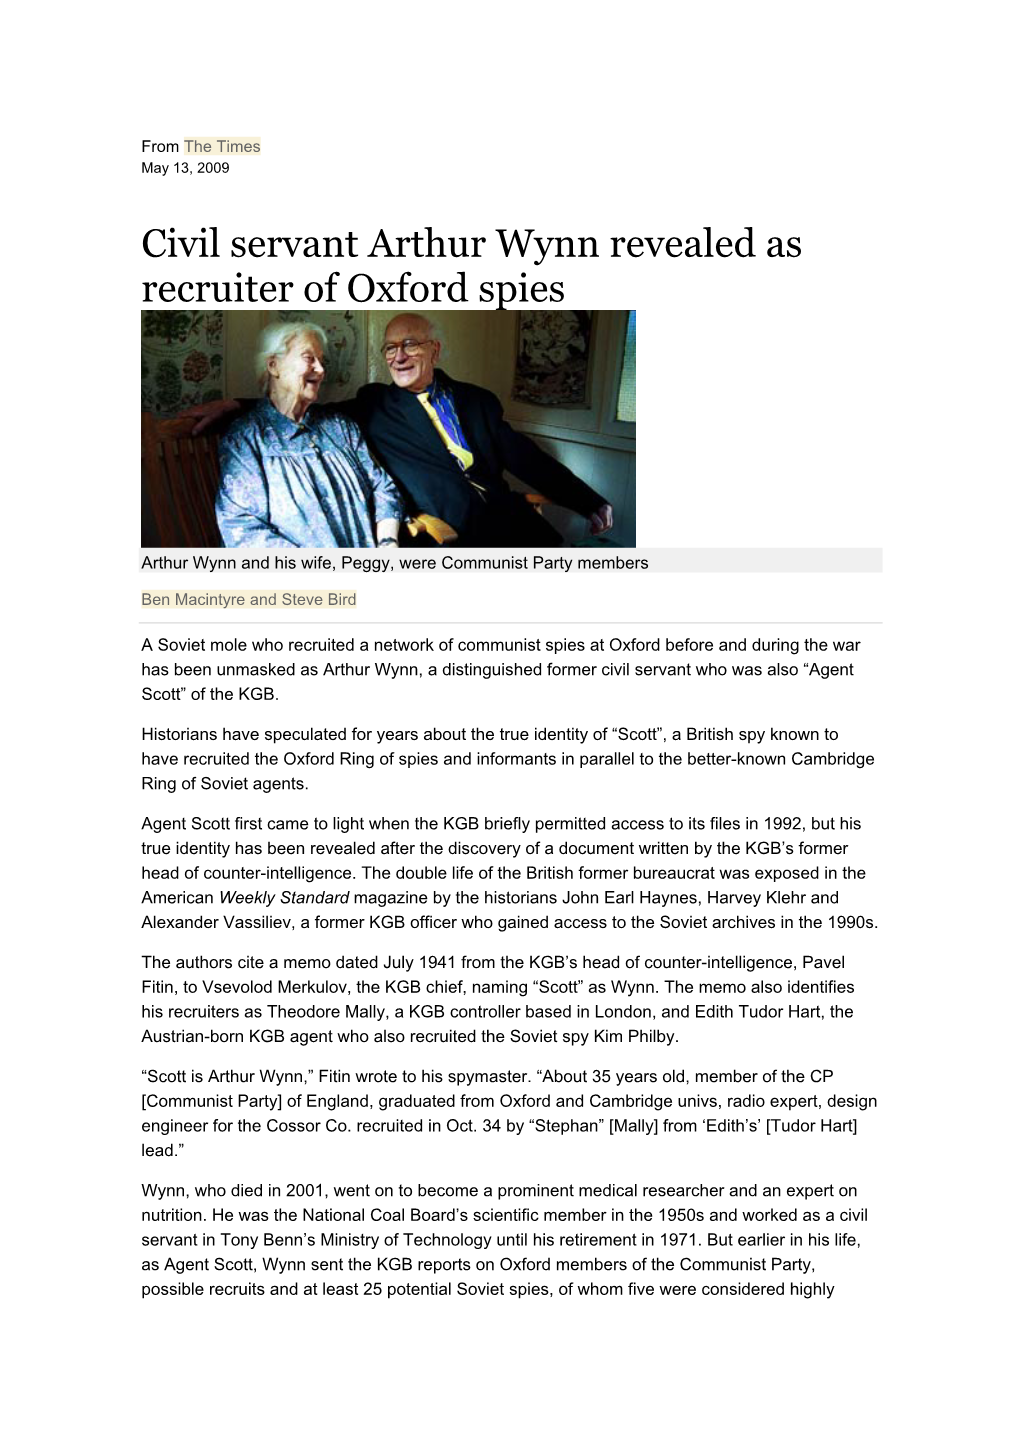 Civil Servant Arthur Wynn Revealed As Recruiter of Oxford Spies